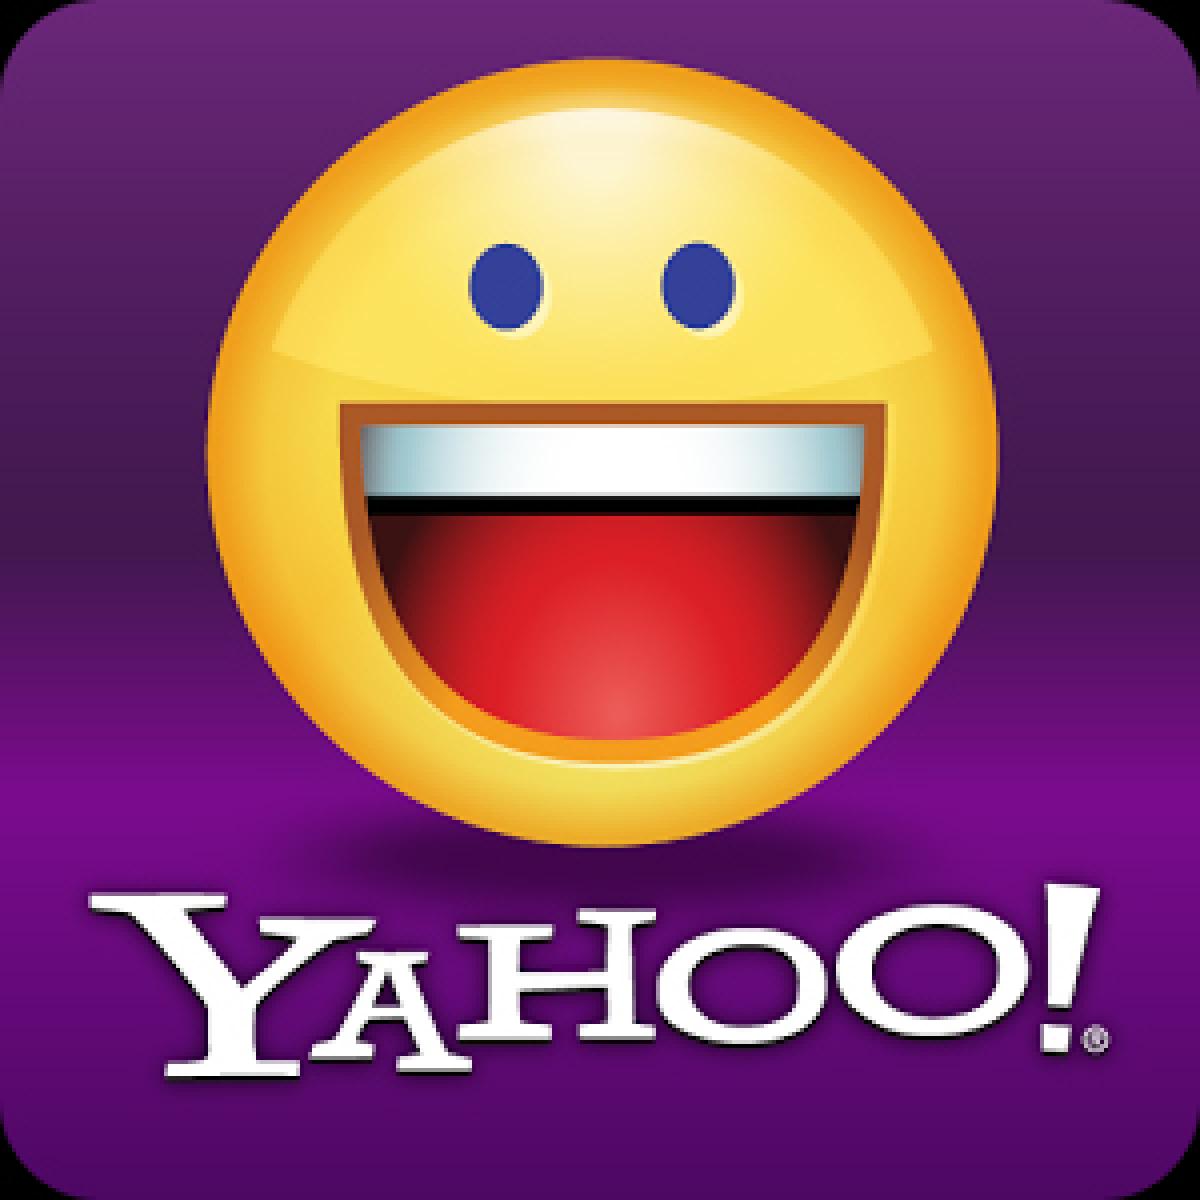 Yahoo Messenger App will soon be history